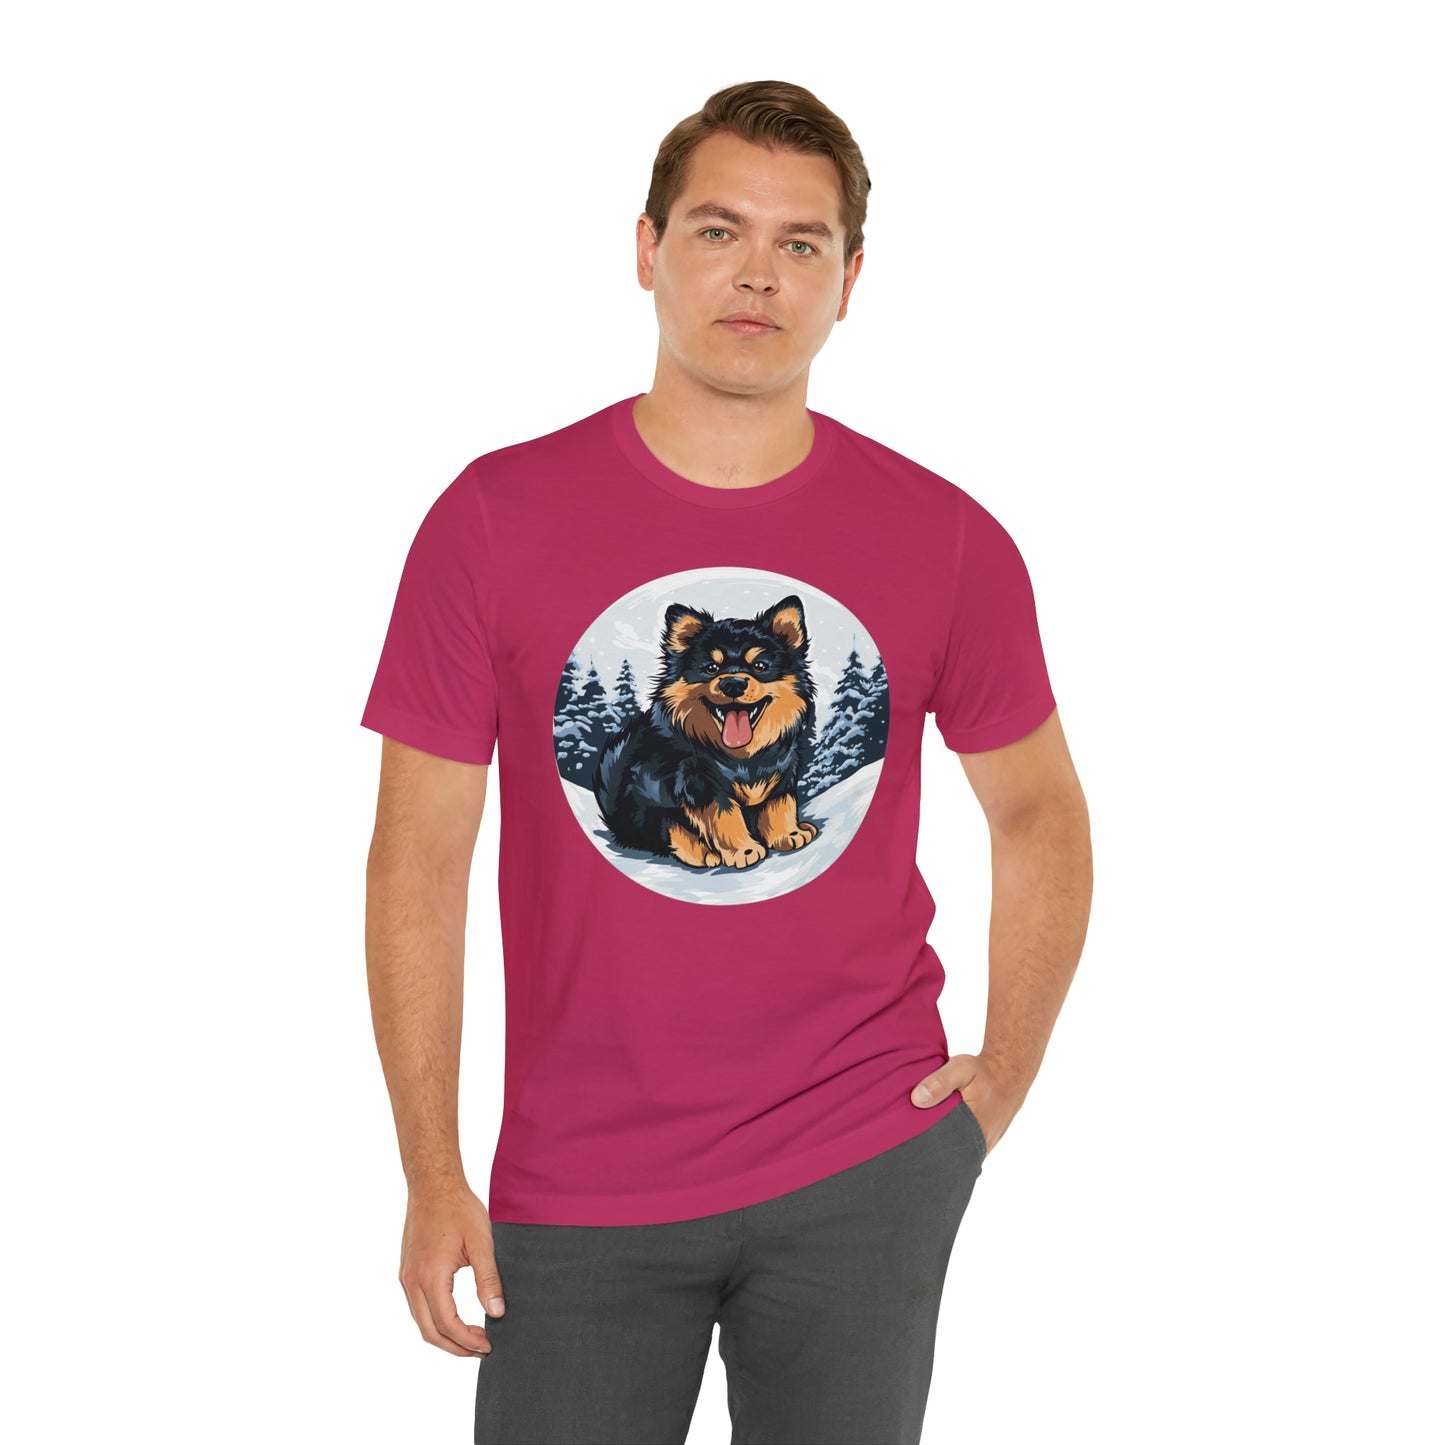 Finnish Lapphund - Snowy #5 - T-Shirt